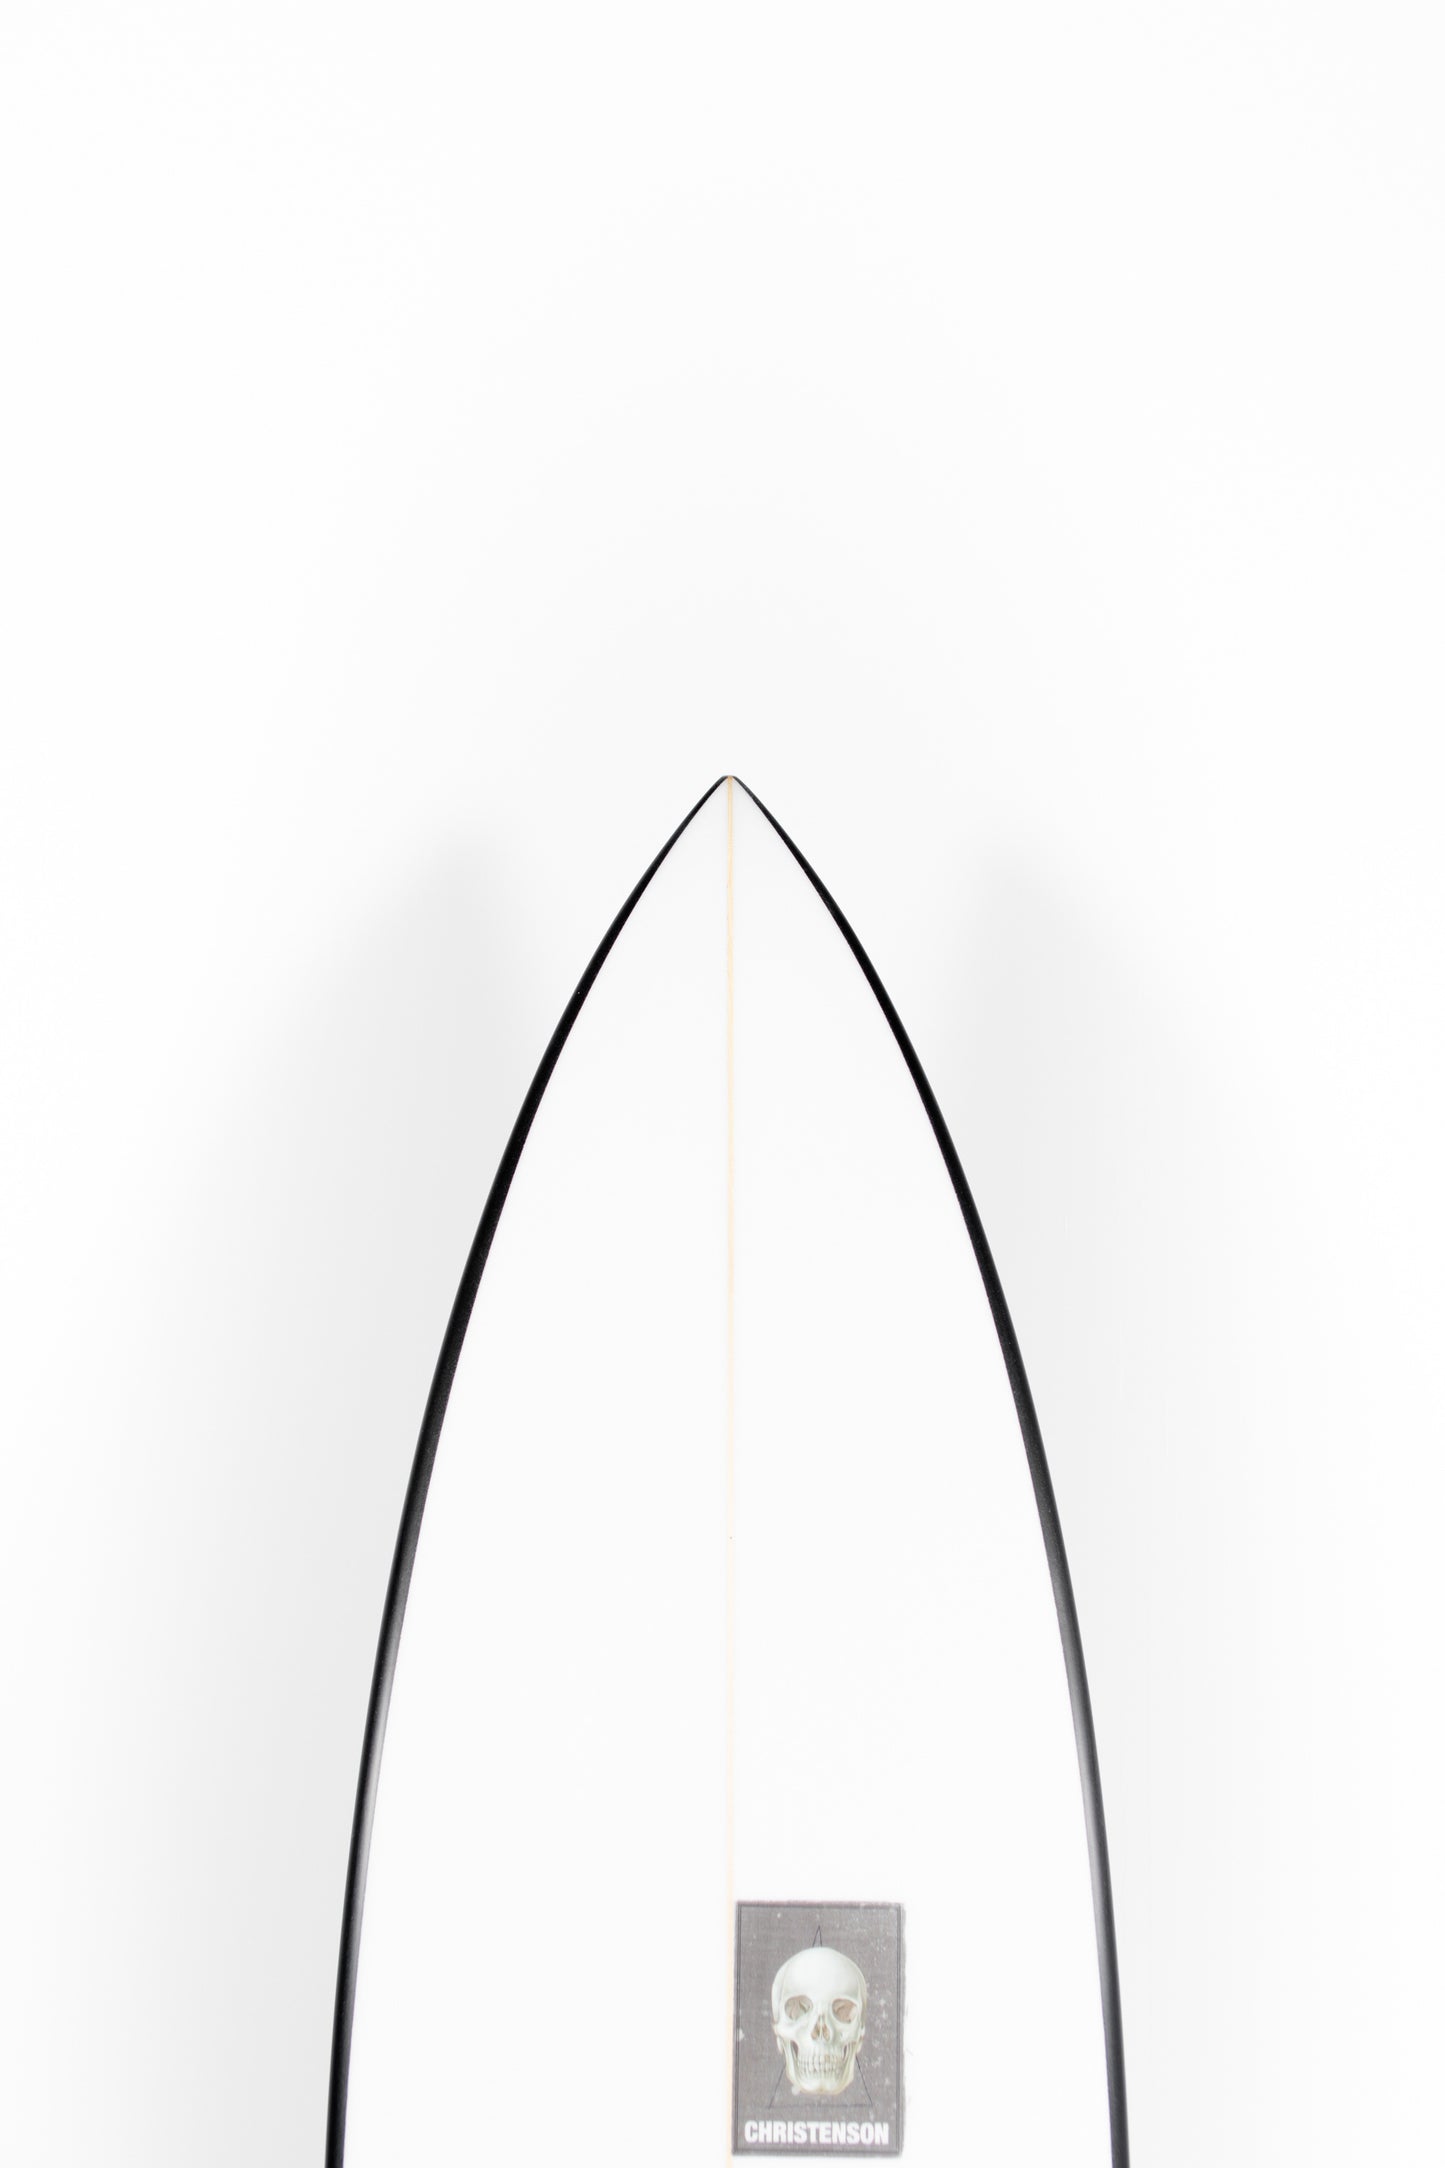 
                  
                    Pukas Surf Shop - Chris Christenson Surfboard  - GERR by Chris Christenson - 6’0” x 19 1/4 x 2 3/8 - CX03368
                  
                